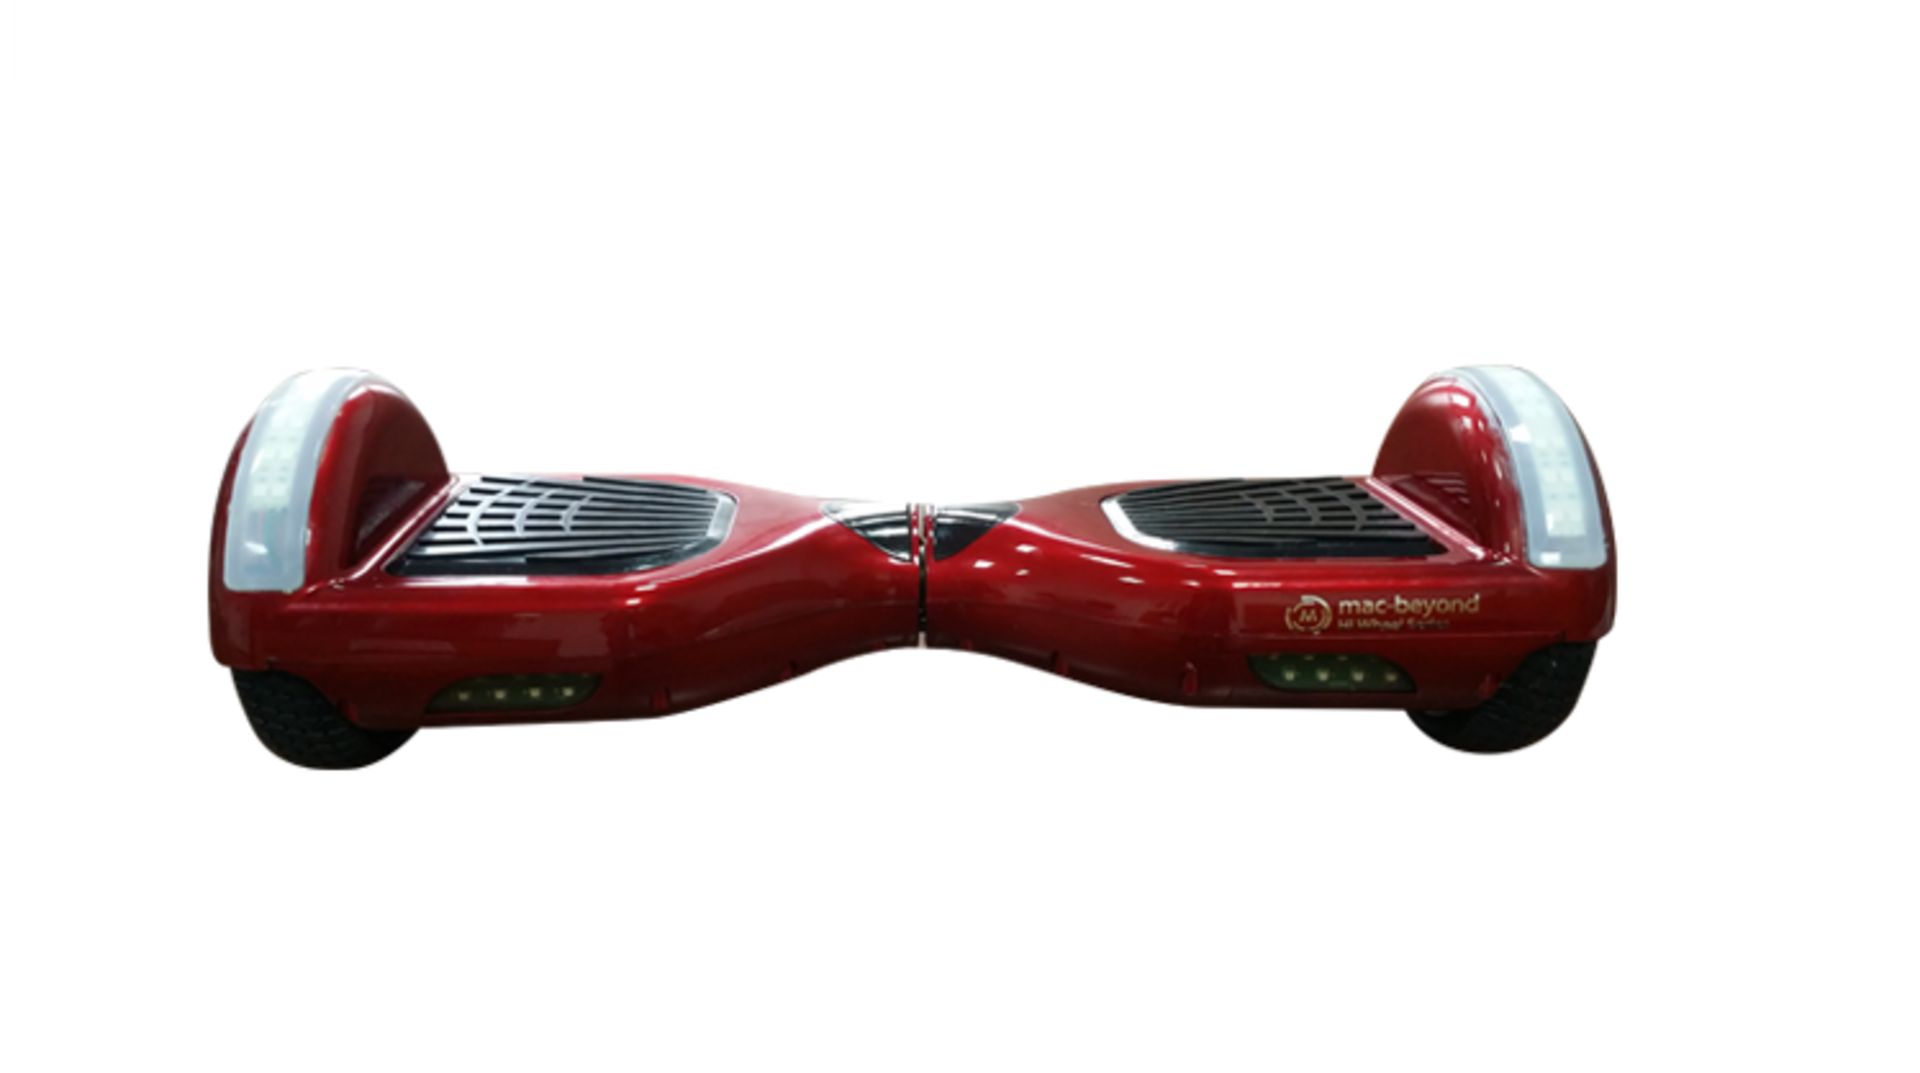 macbeyond x Hi wheel Series, Red Model Name: R2 LED (6.5 inch wheels, Best Seller) Smart personal - Image 6 of 8